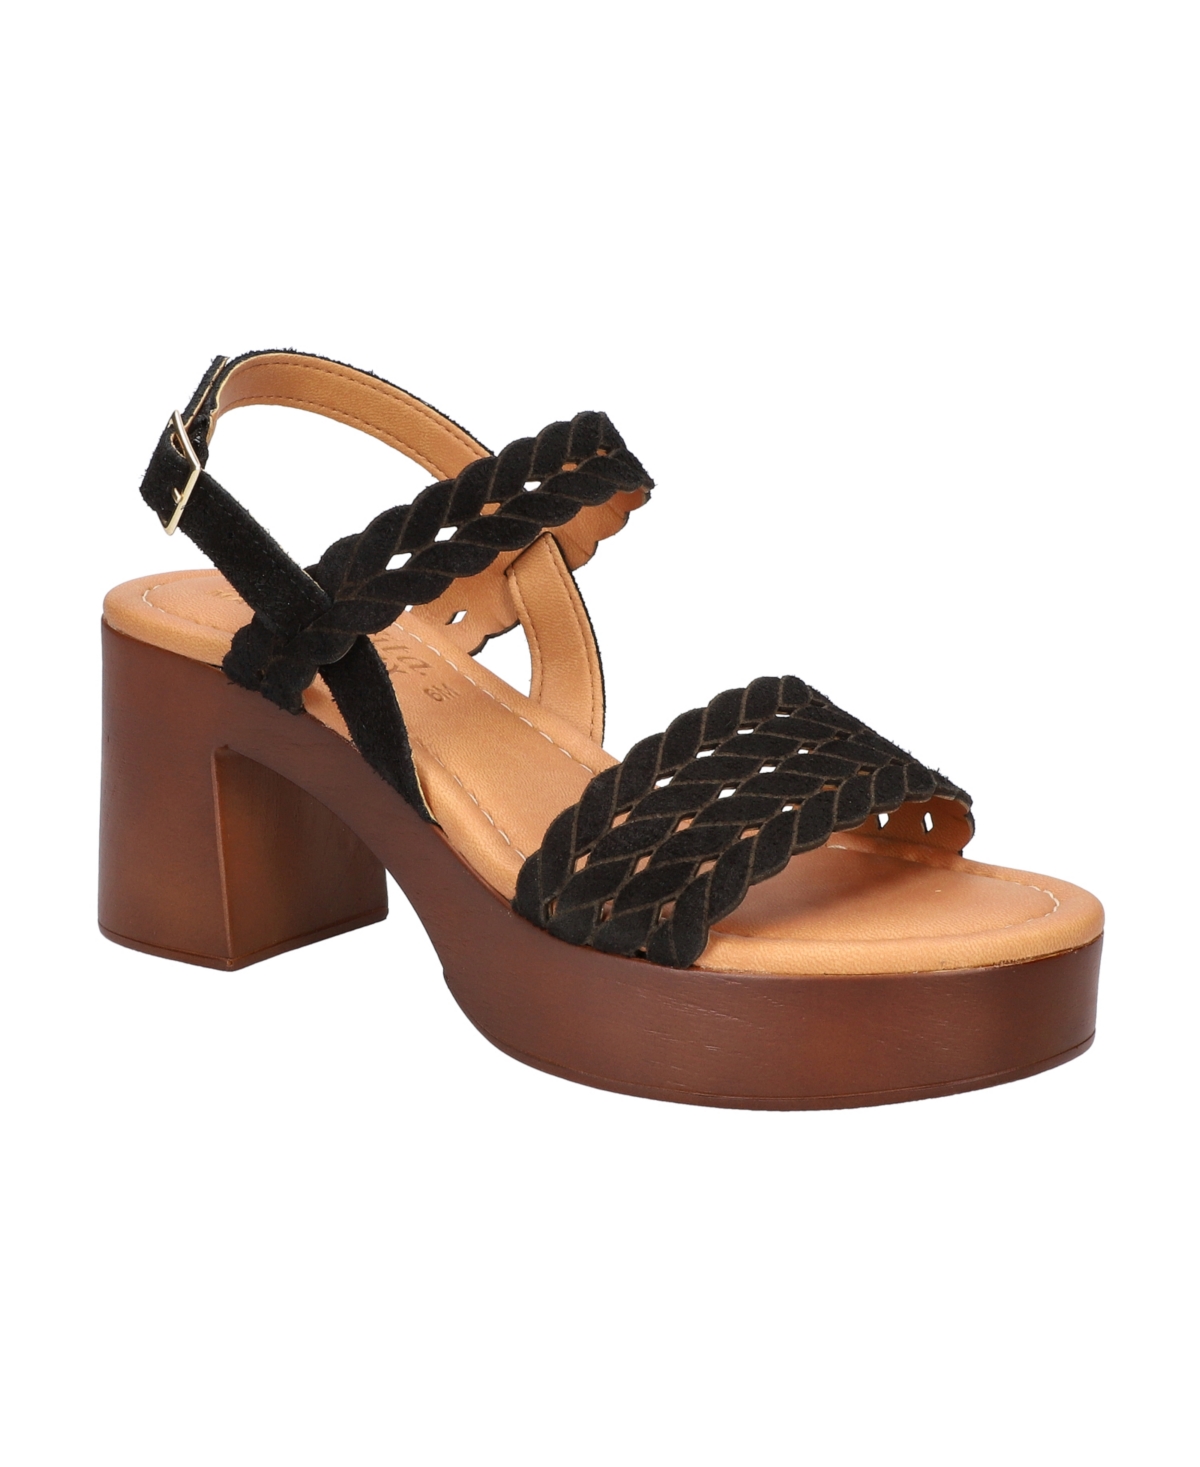 Women's Jud-Italy Platform Sandals - Blush Suede Leather